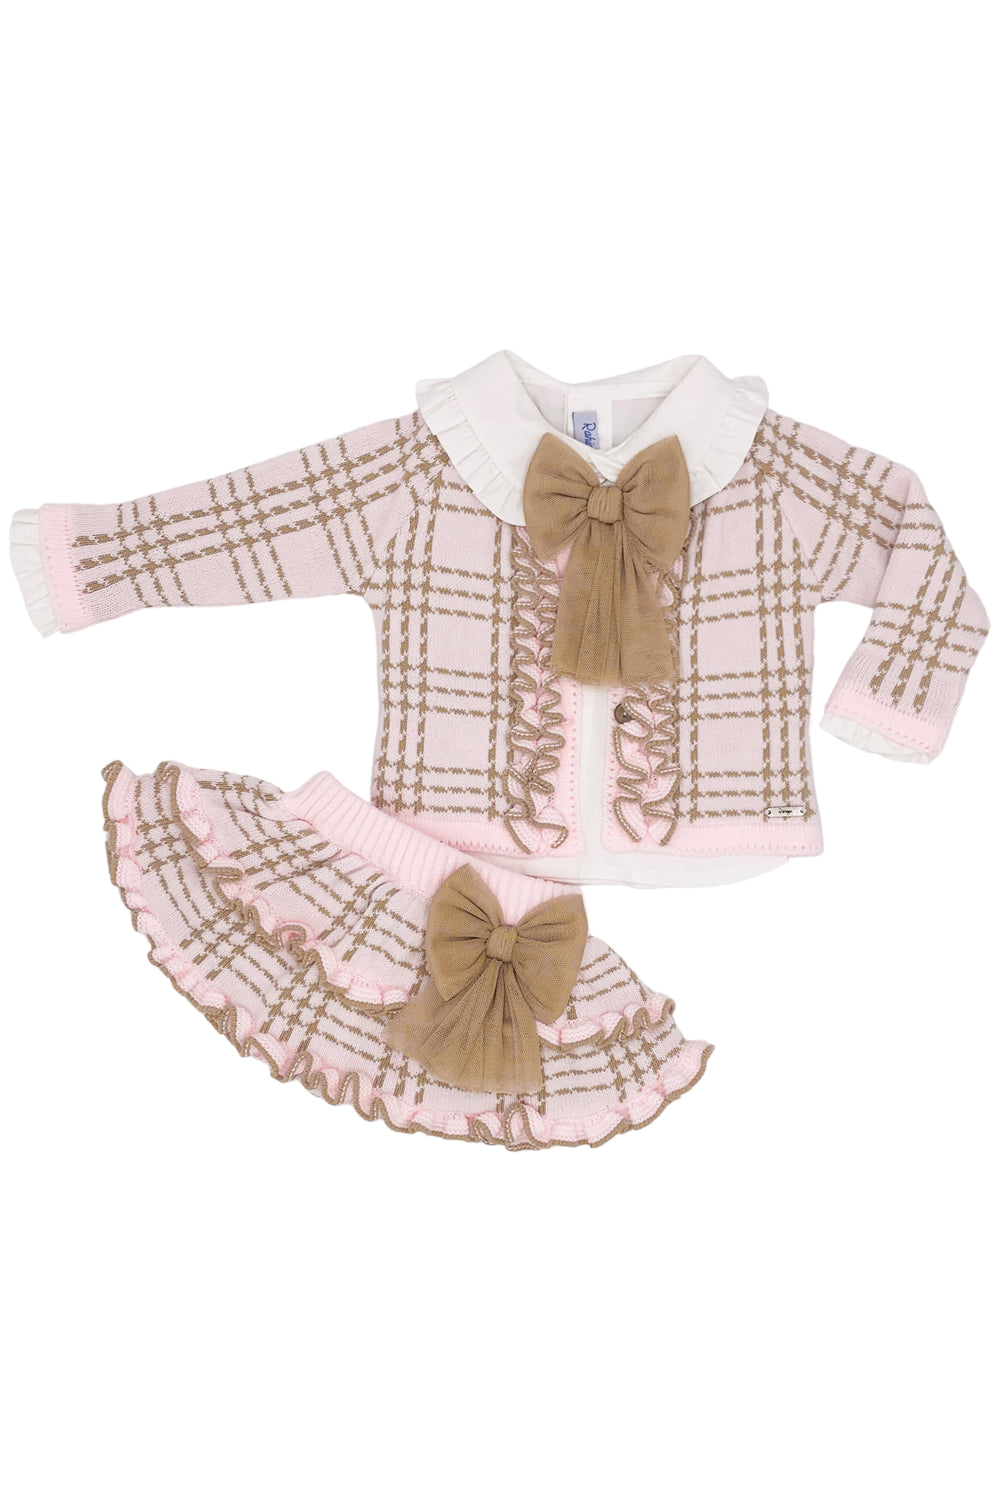 Rahigo "Madison" Pink & Camel Knit Skirt Set | Millie and John